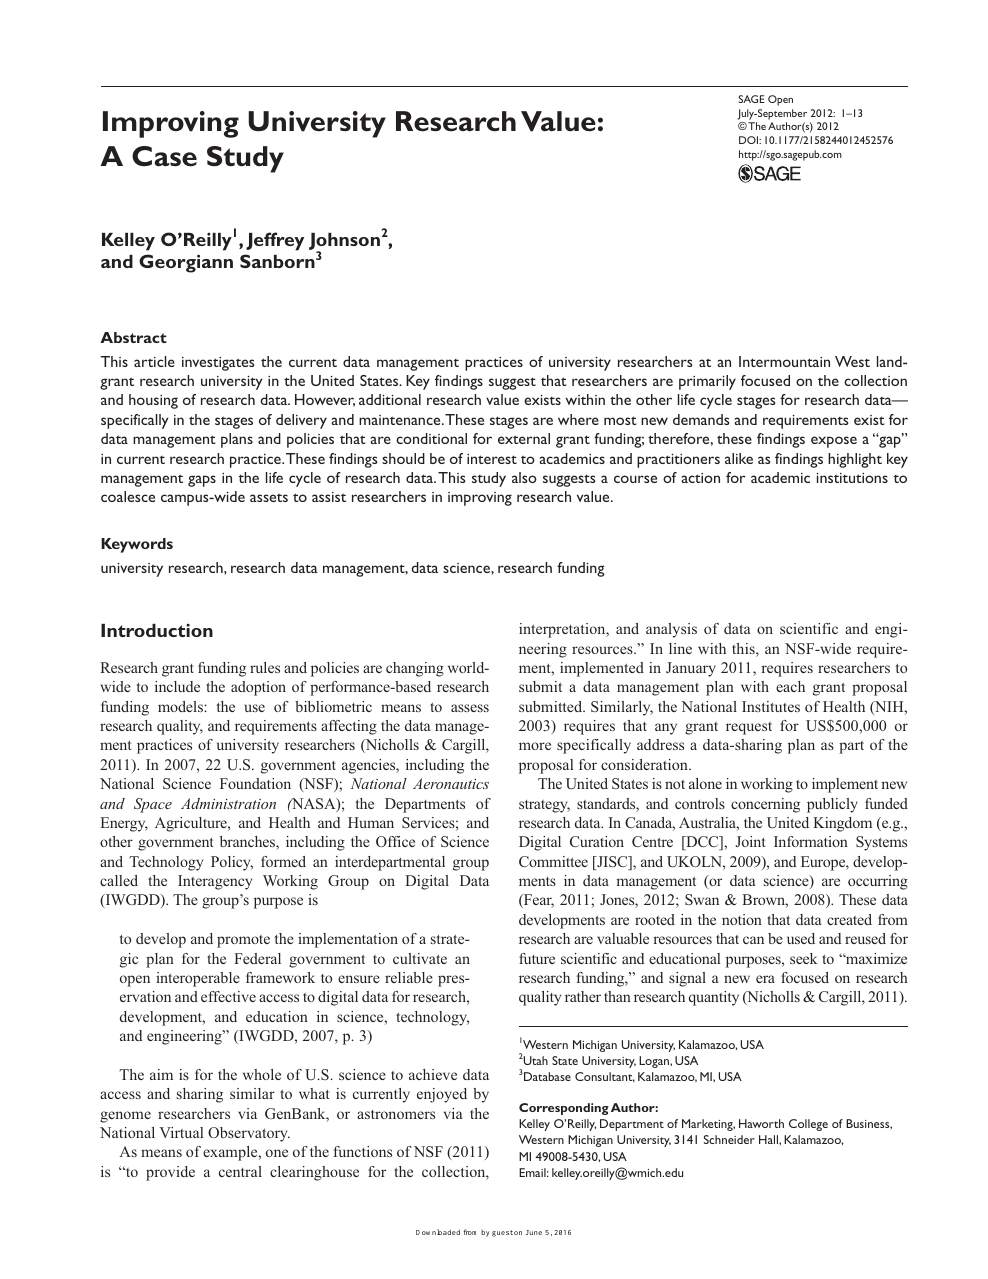 paper on case study